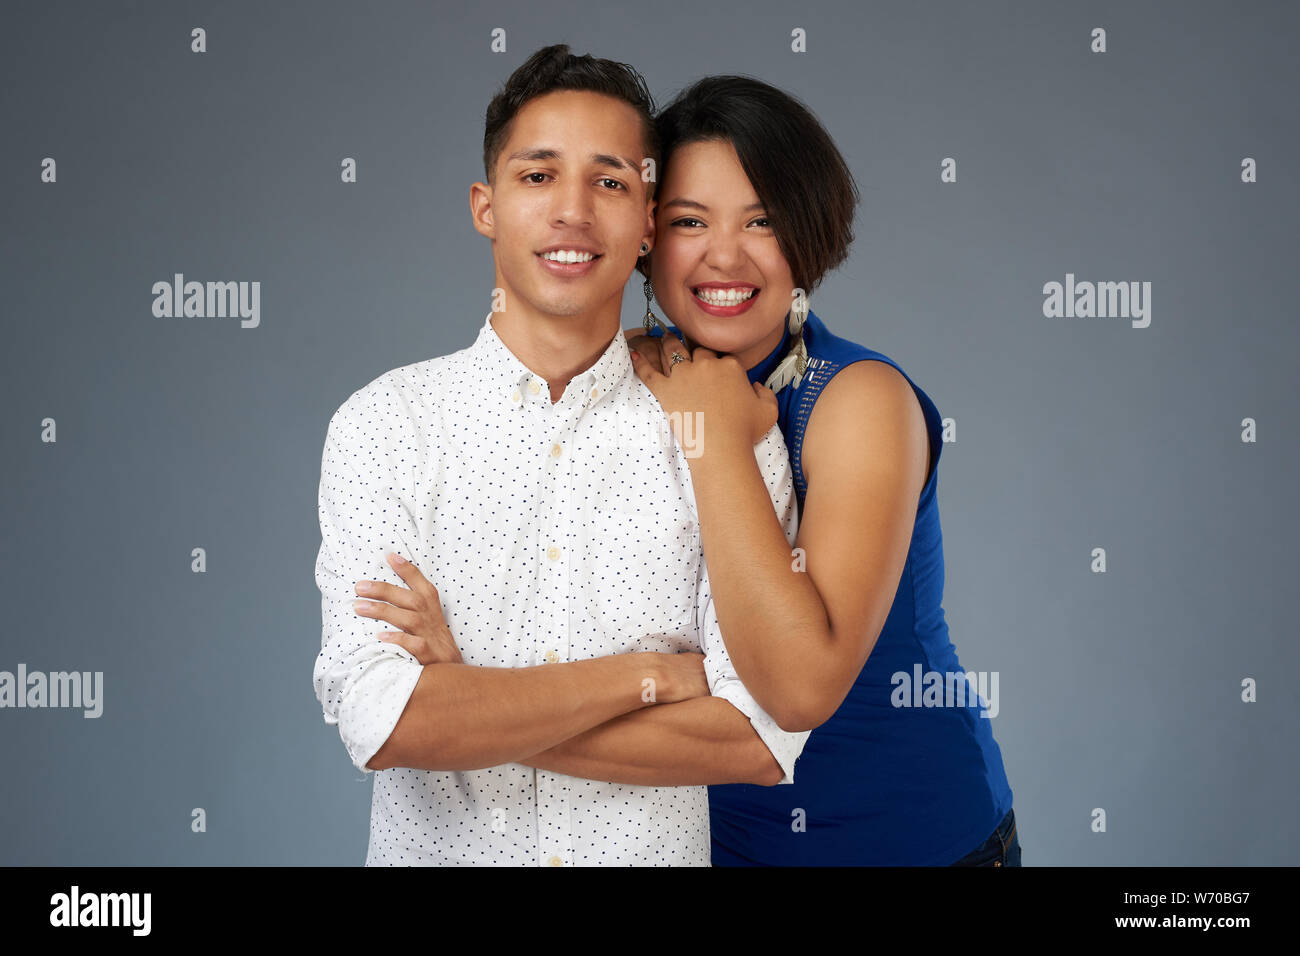 Portrait of young latin couple isolated on gray studio background Stock Photo